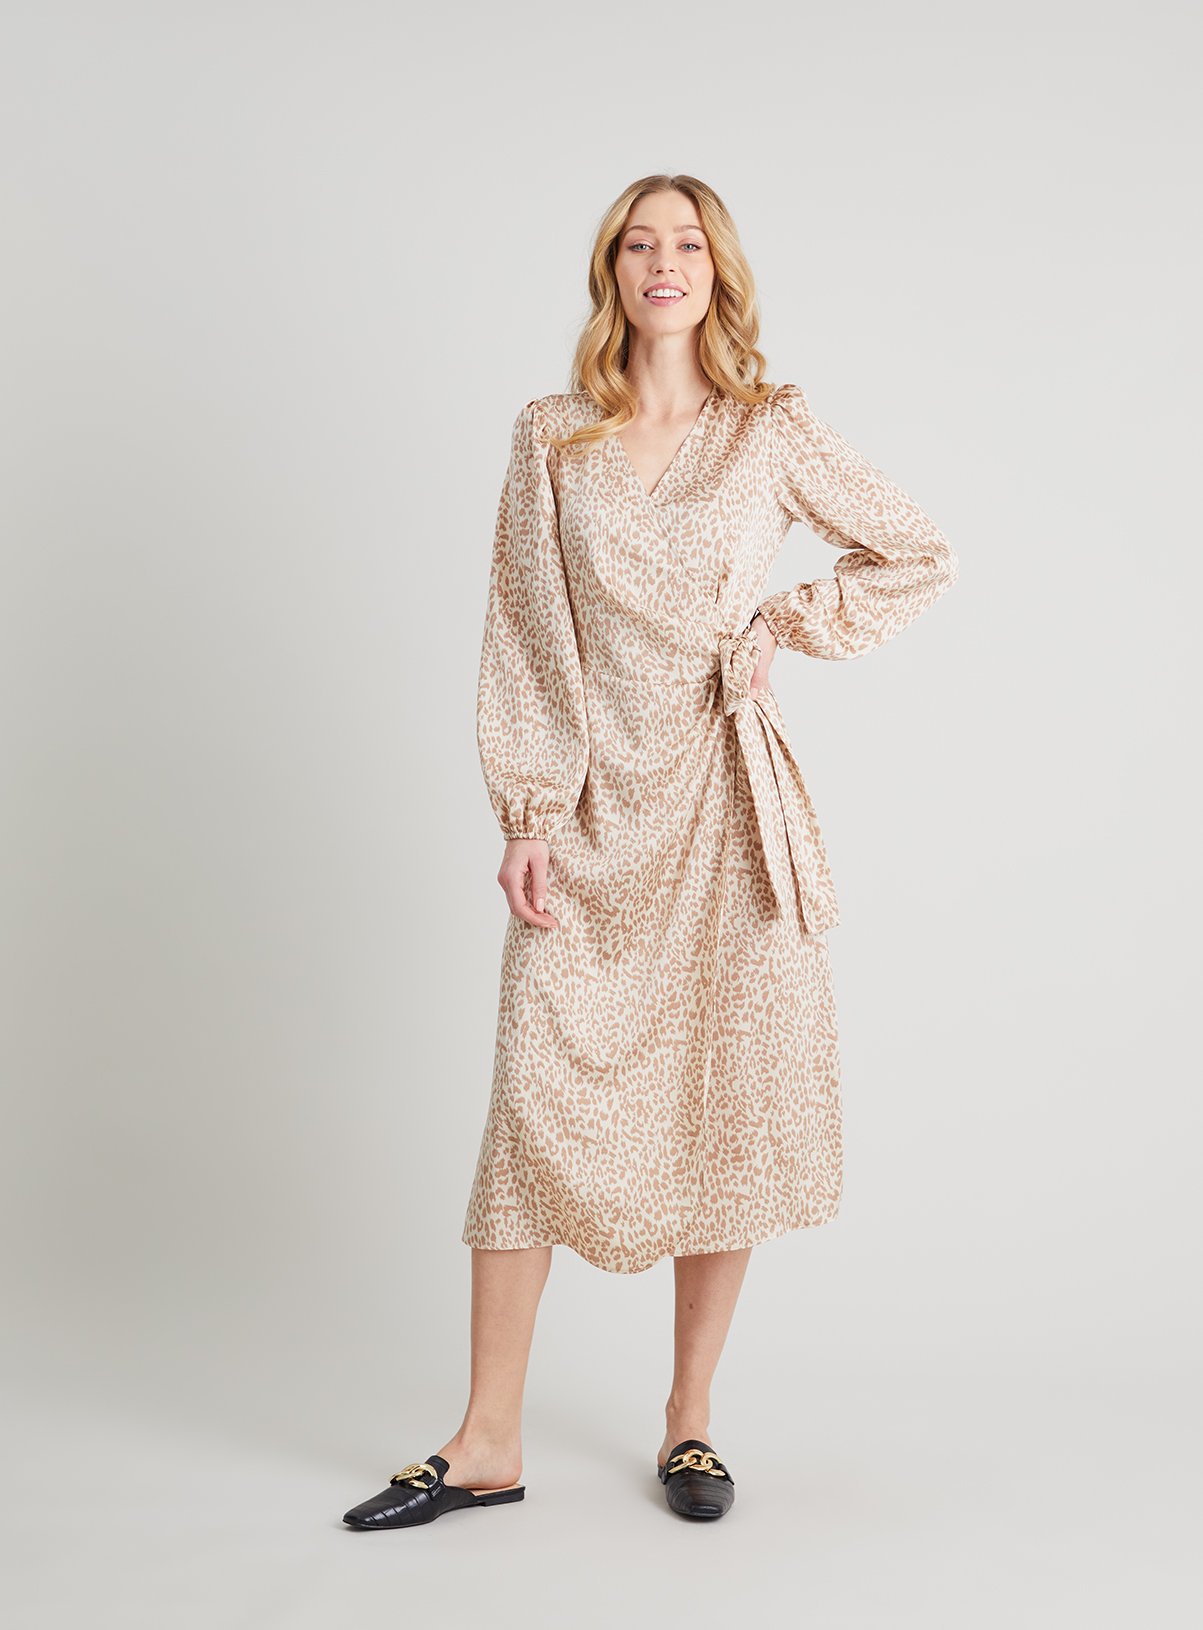 Buy Leopard Print Satin Wrap Dress - 22 ...